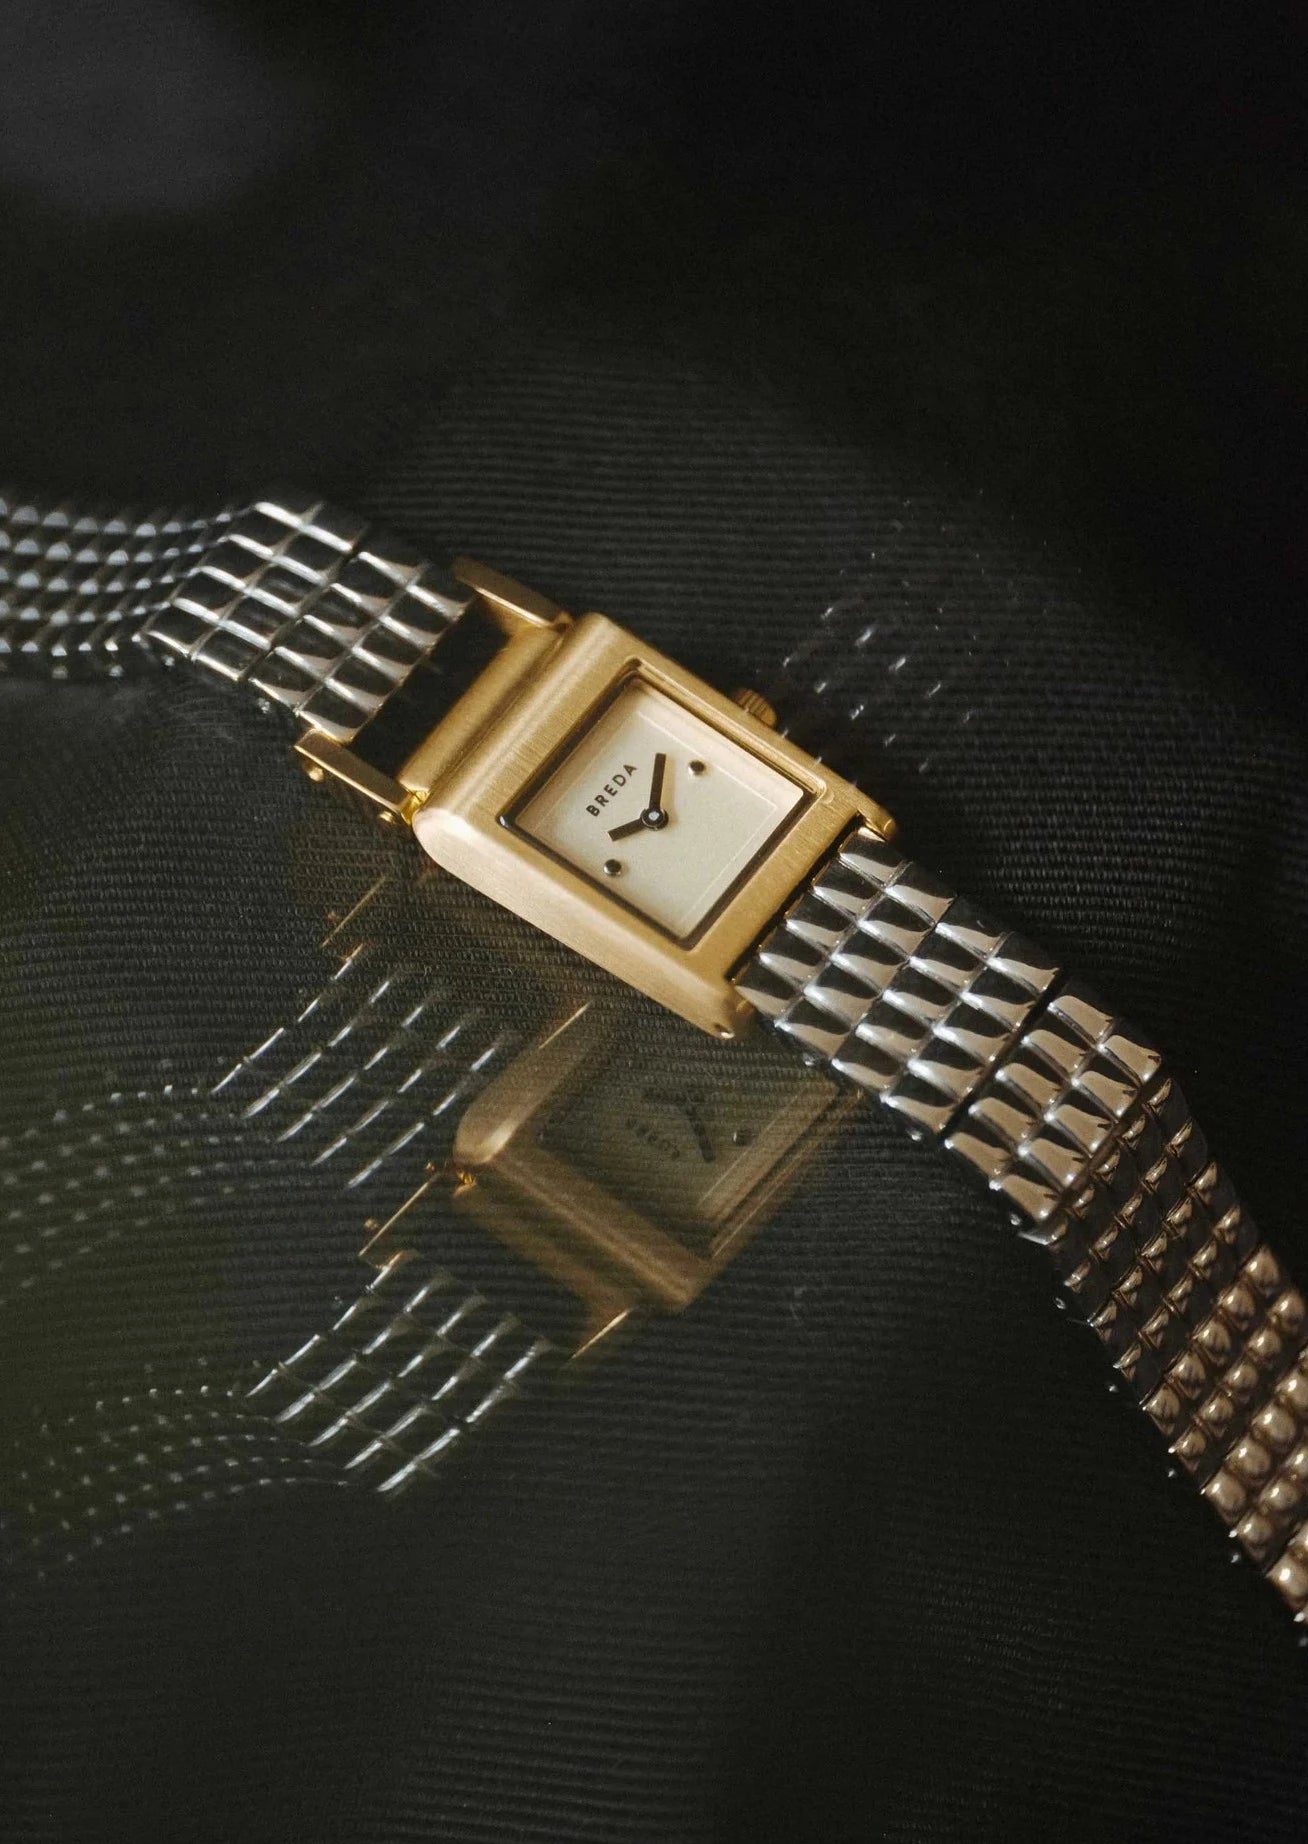 watches design creation by joko lelono at Coroflot.com